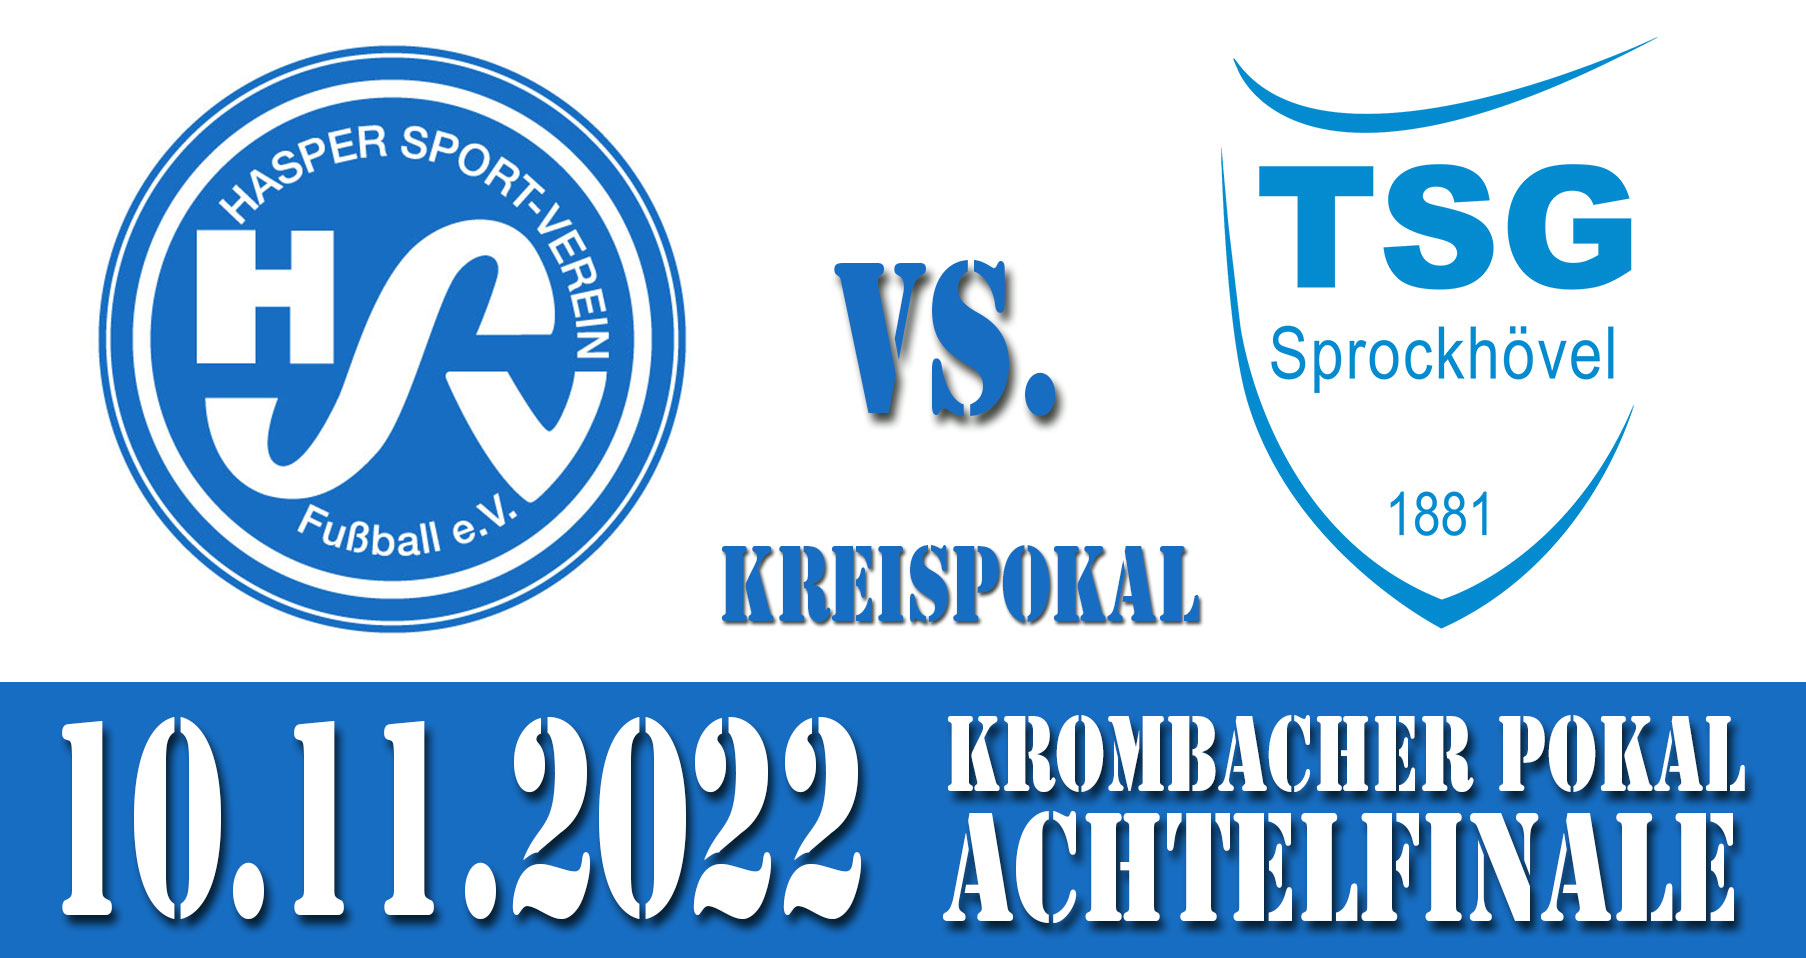 Kreispokal Achtelfinale - Krombacher Pokal Achtelfinale 20. November